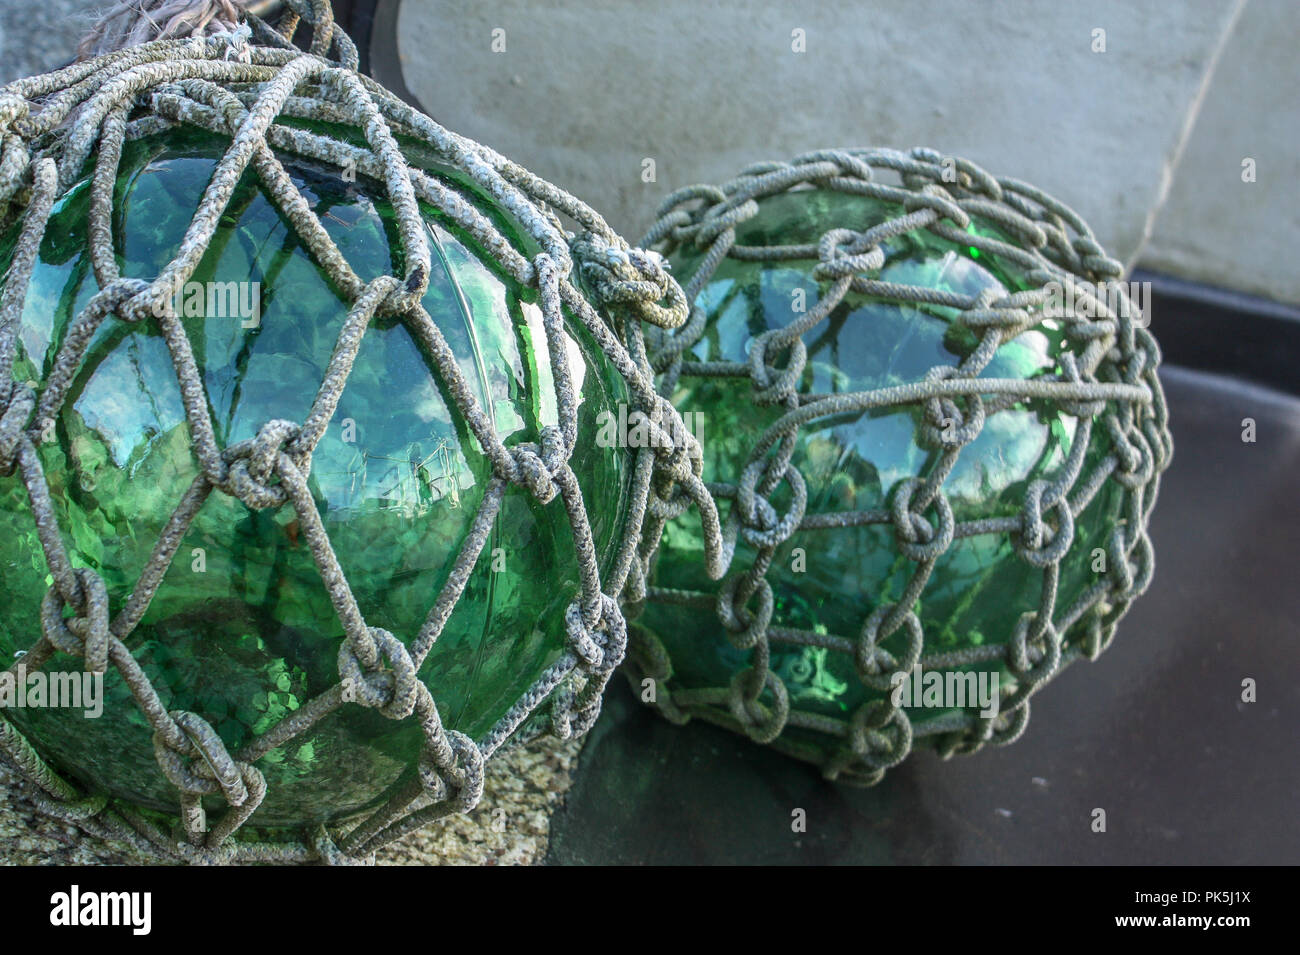 https://c8.alamy.com/comp/PK5J1X/vintage-green-glass-fishing-float-balls-knotted-in-jute-rope-PK5J1X.jpg